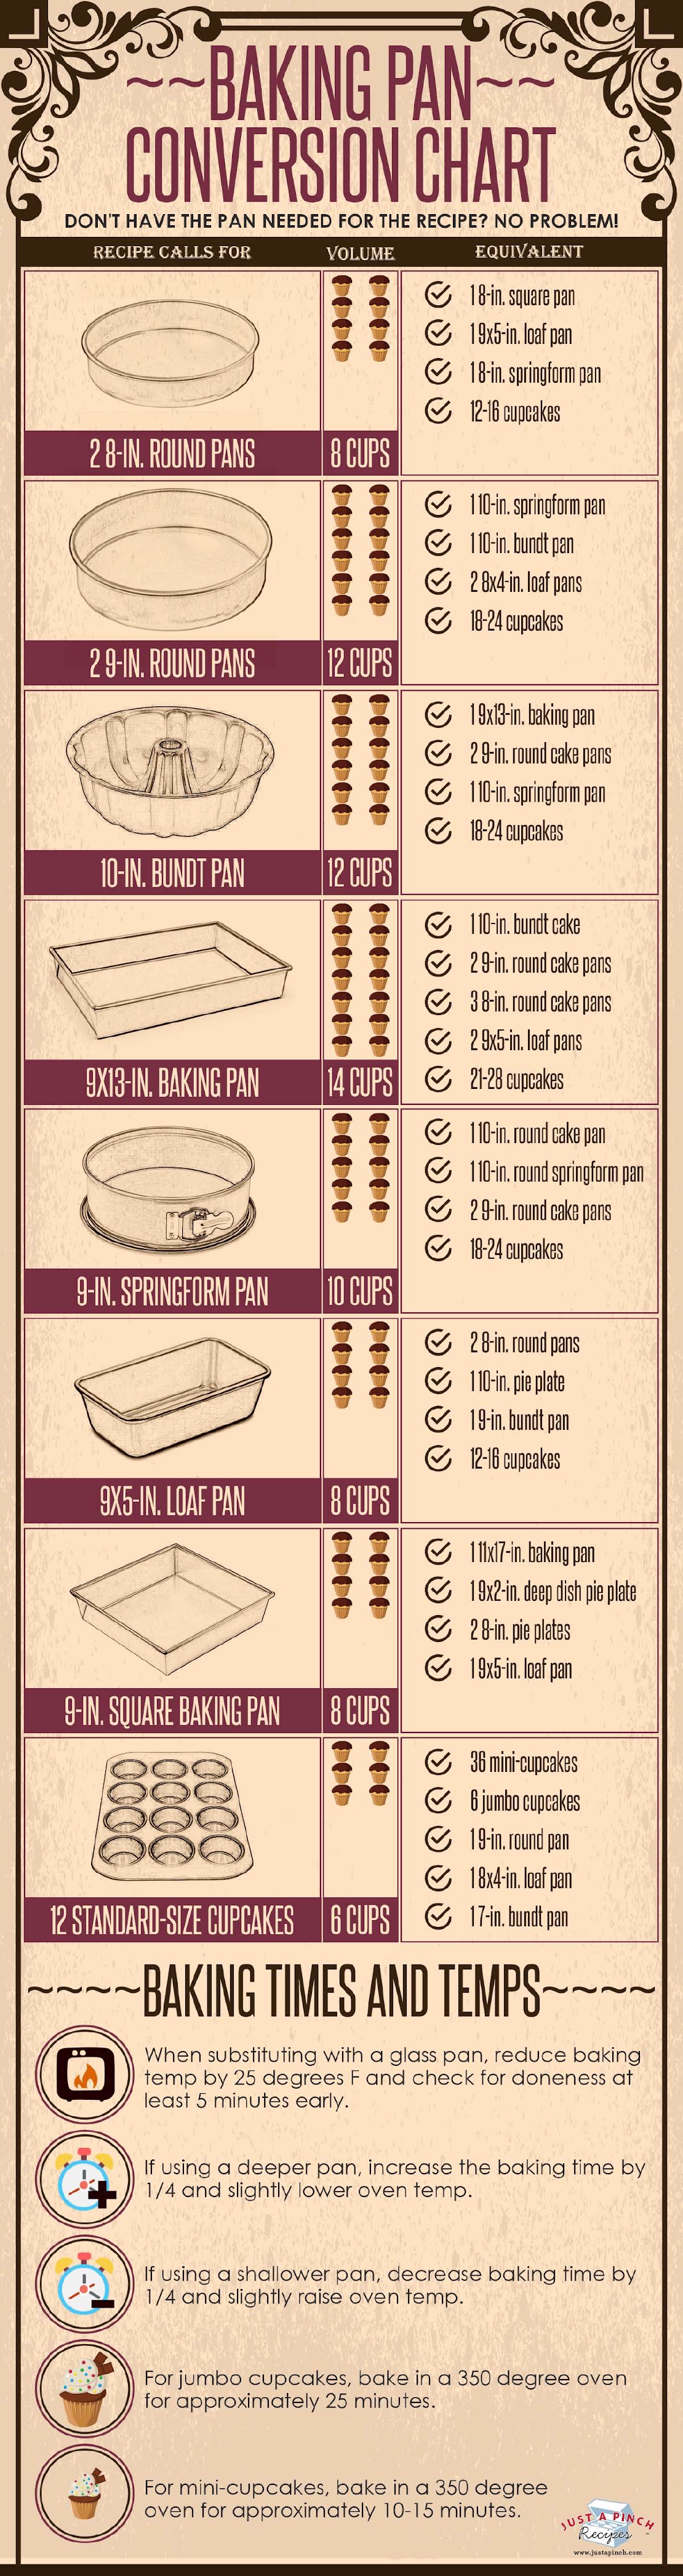 Baking Pan Conversion Chart